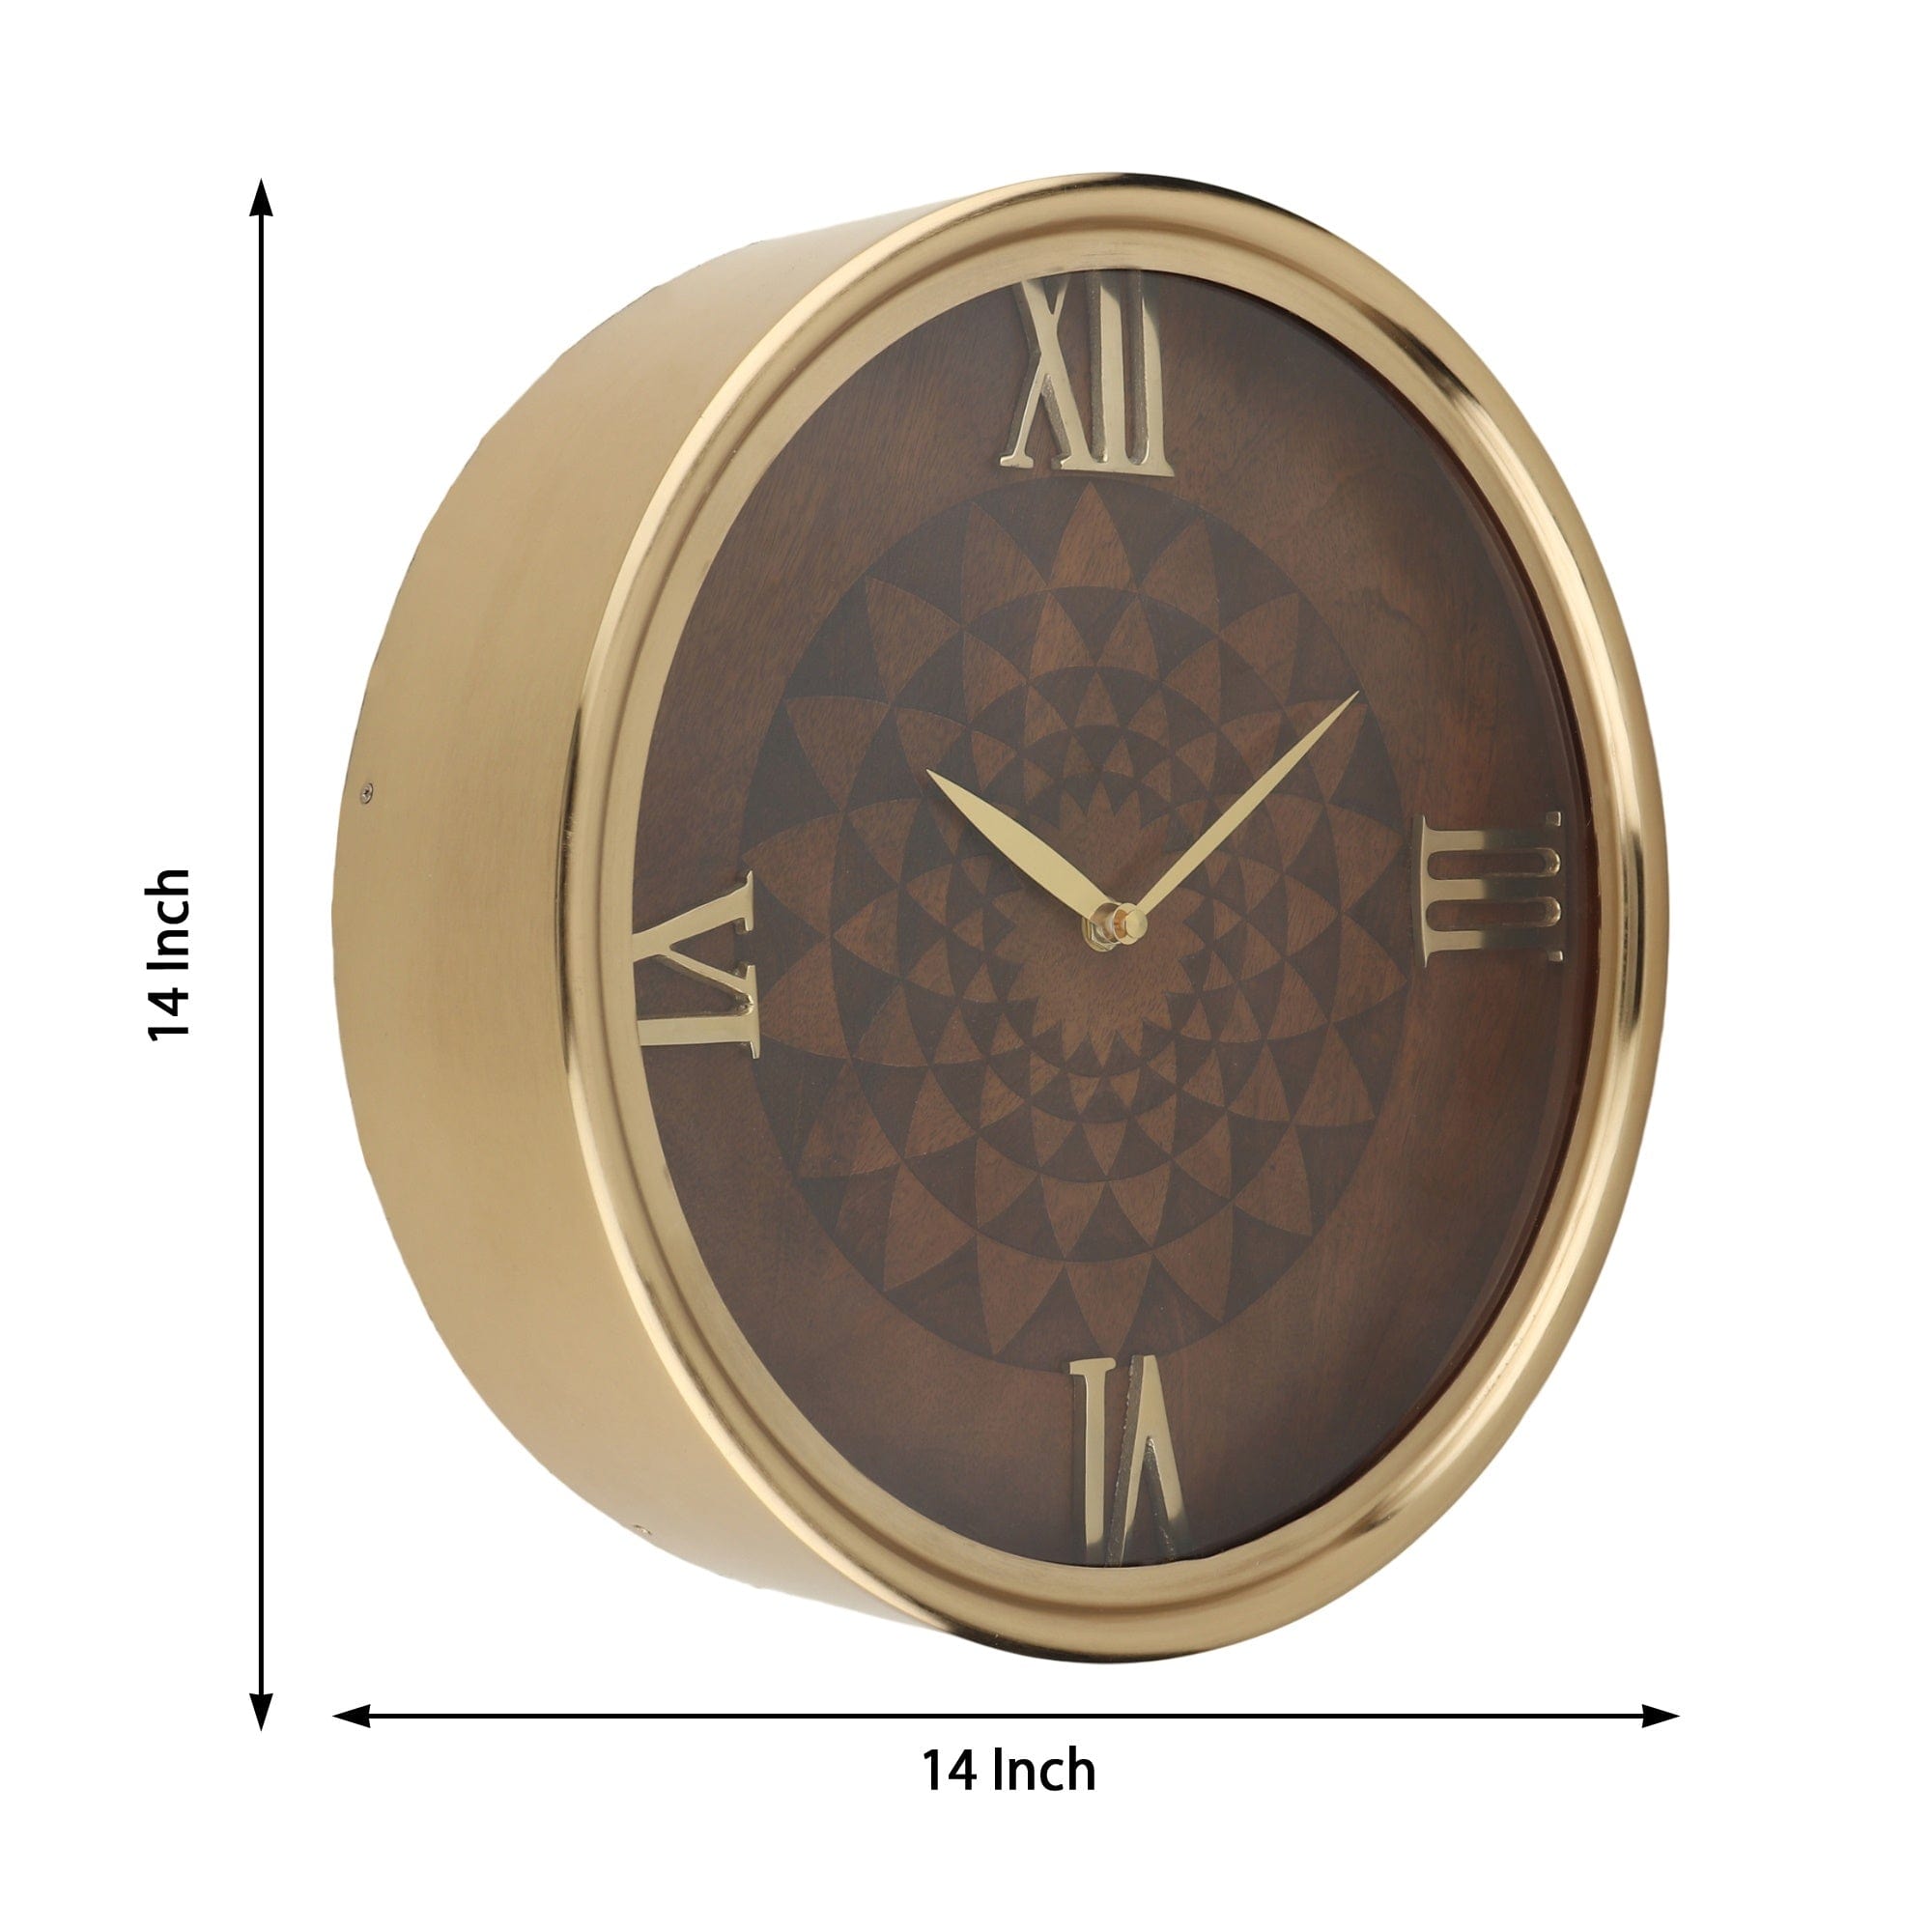 Luxe Woodcraft Wall Clock